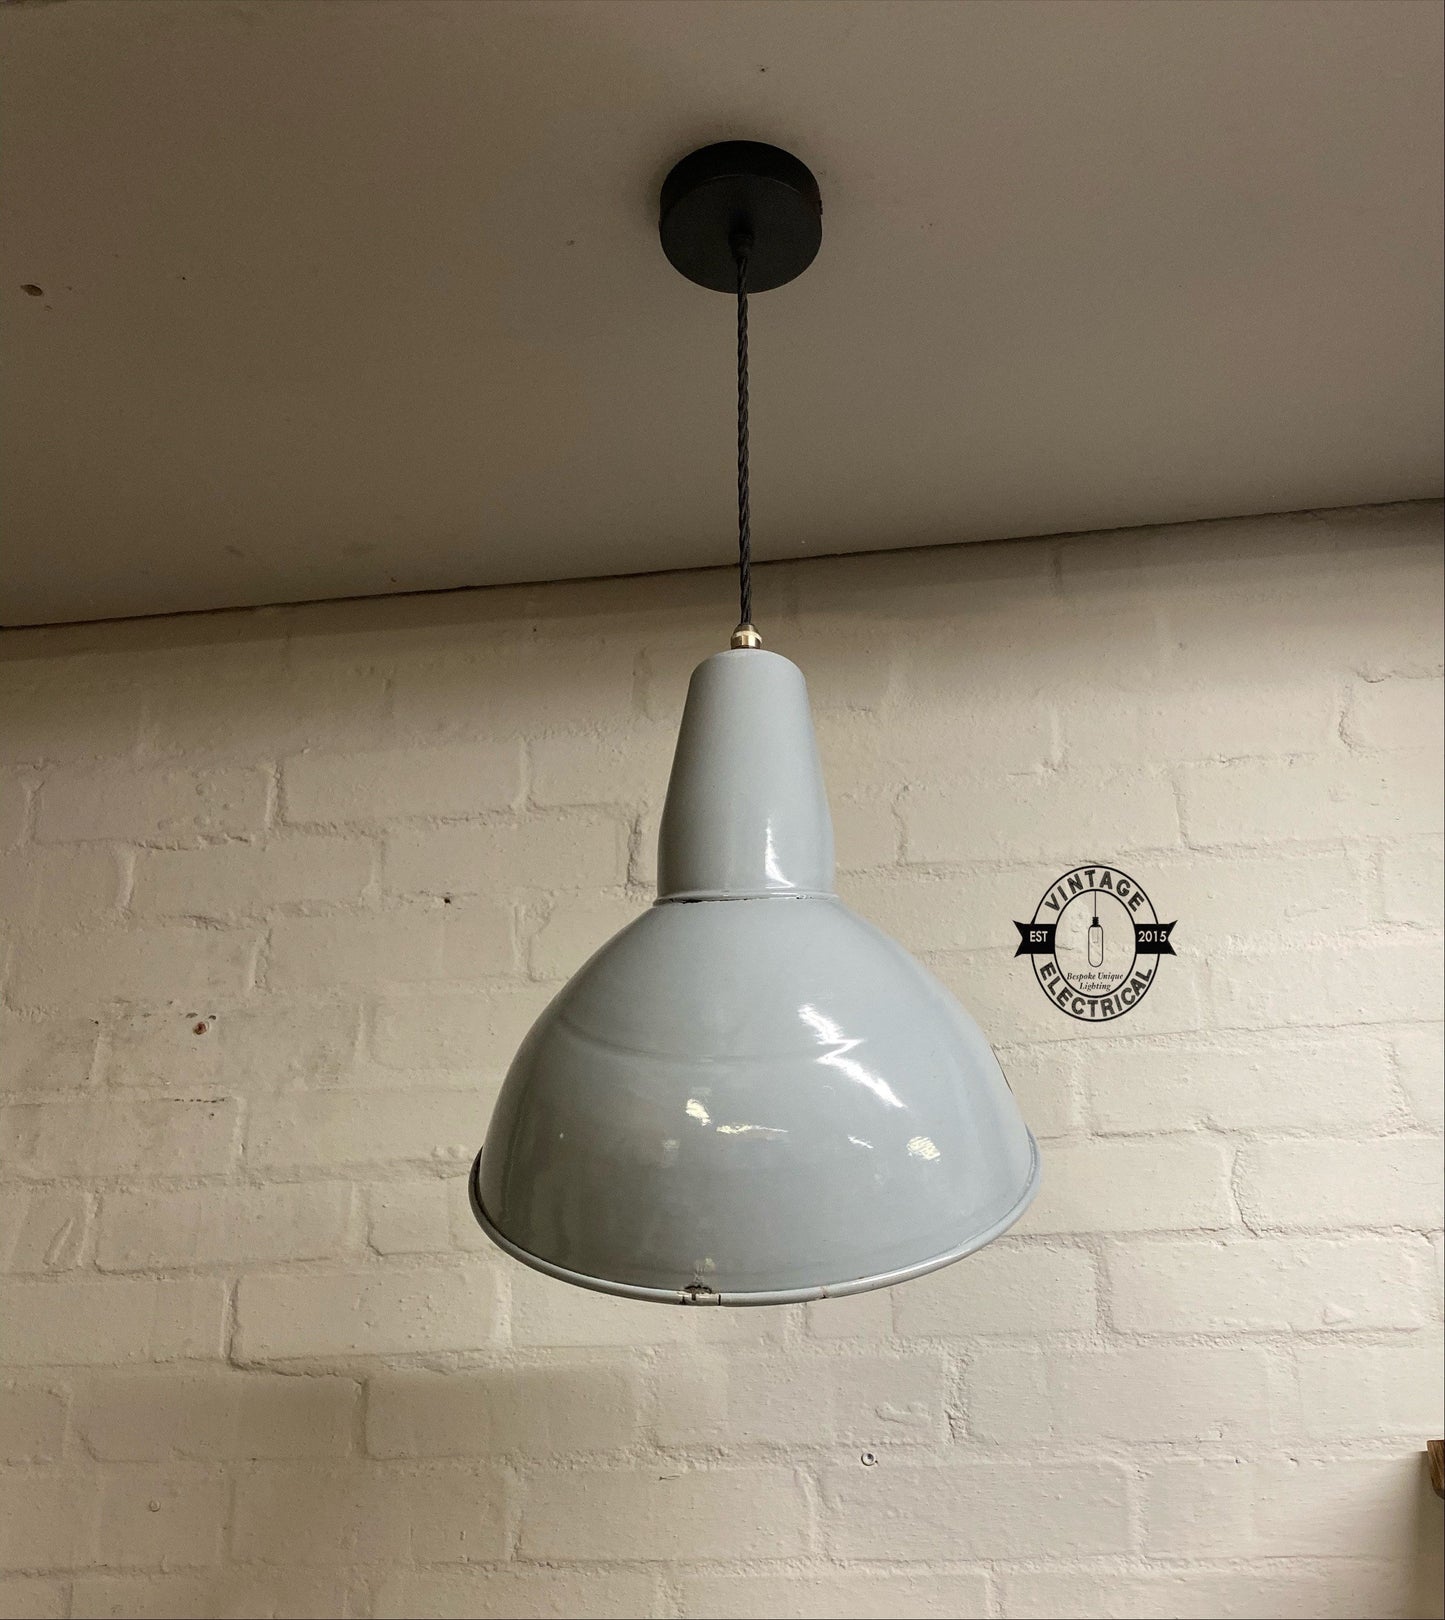 Benjamin 1950s Grey Industrial Parabolic Shade Pendant Set Light | Ceiling Dining Room Kitchen Table | Vintage 1 x Edison Filament Bulb Lamp